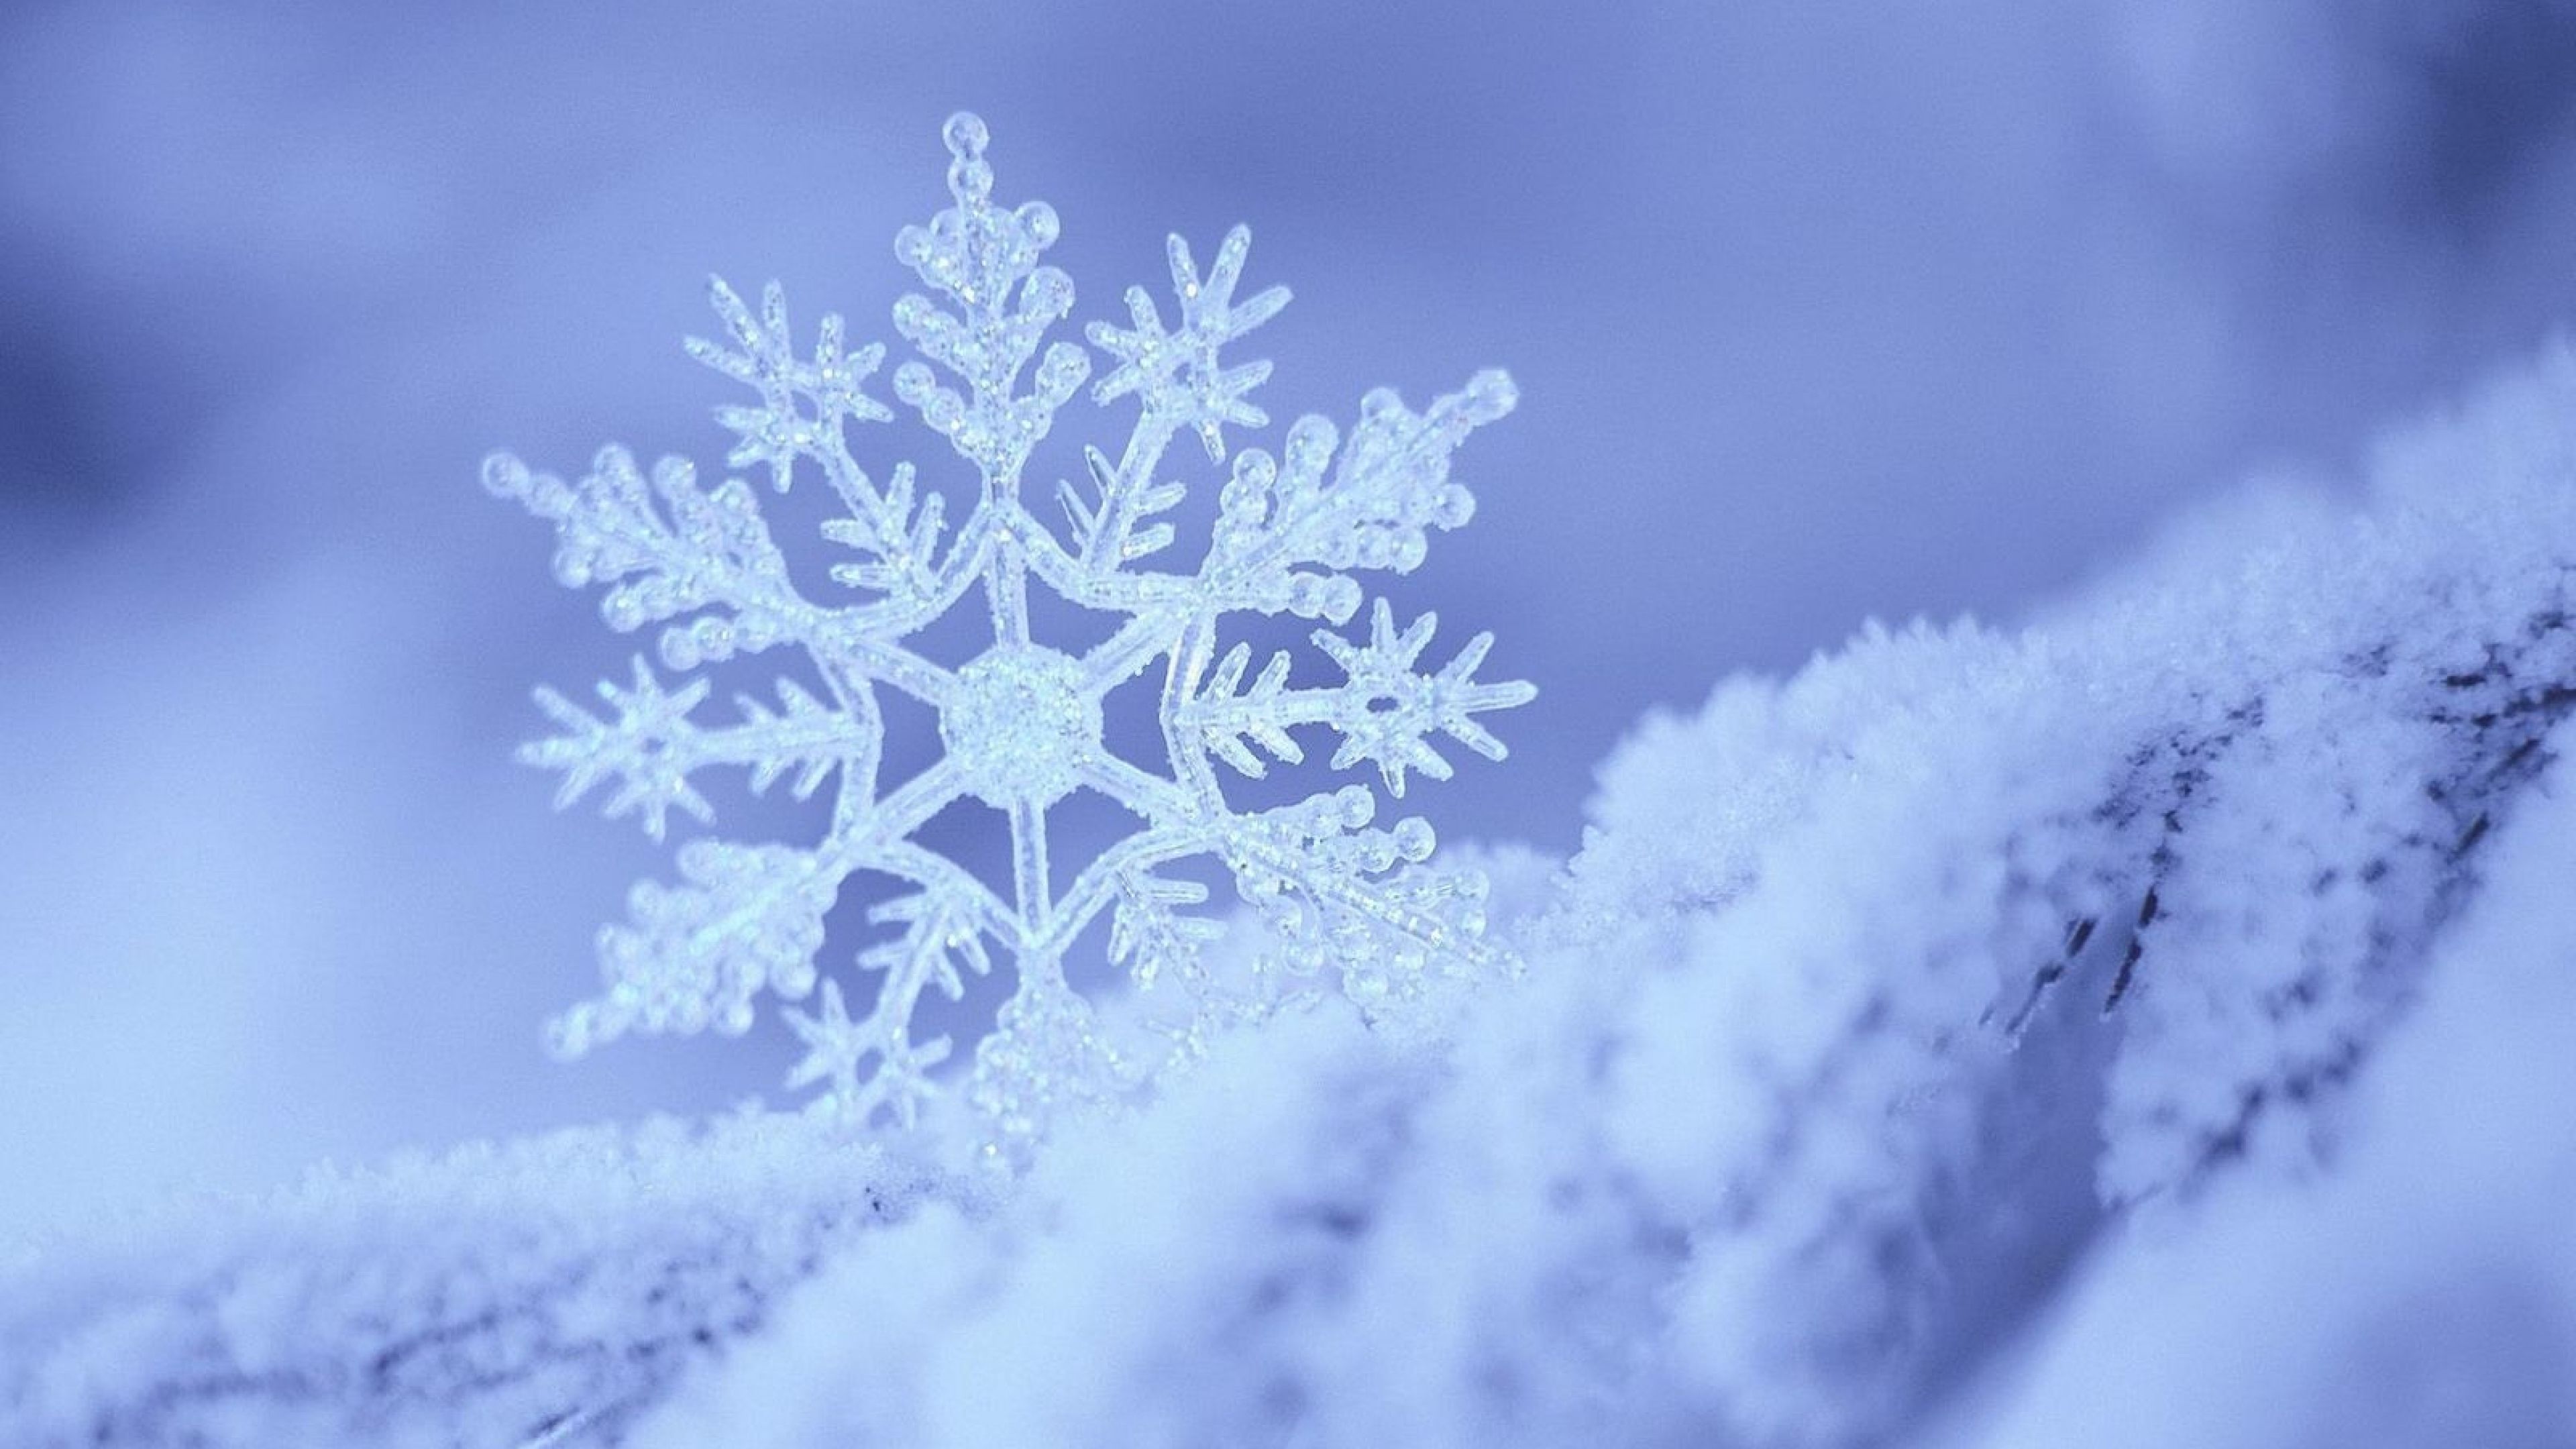 A snowflake on top of snow - Snowflake